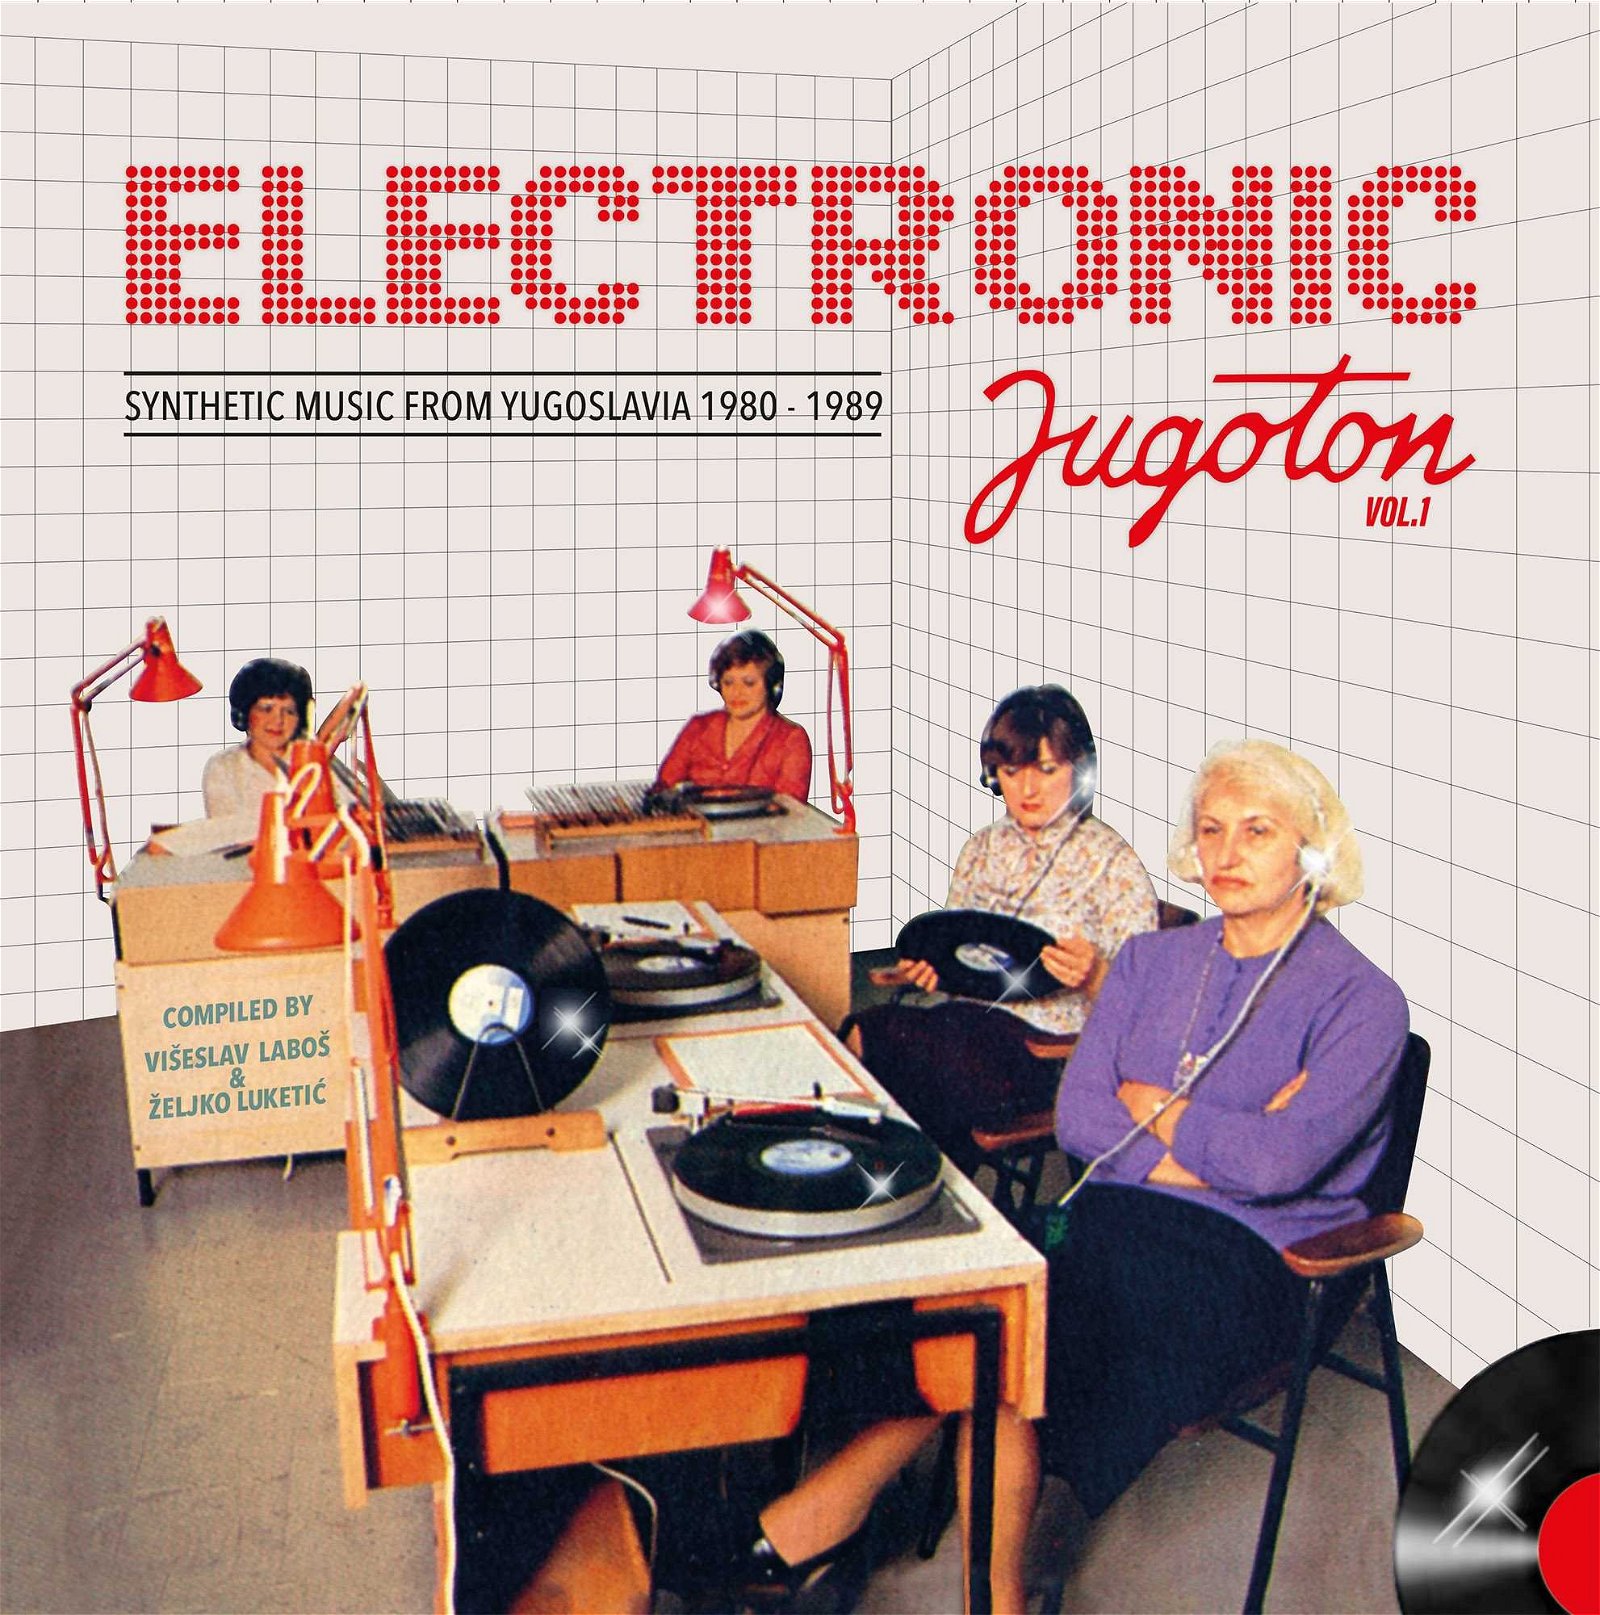 CD Shop - V/A ELECTRONIC JUGOTON VOL.1